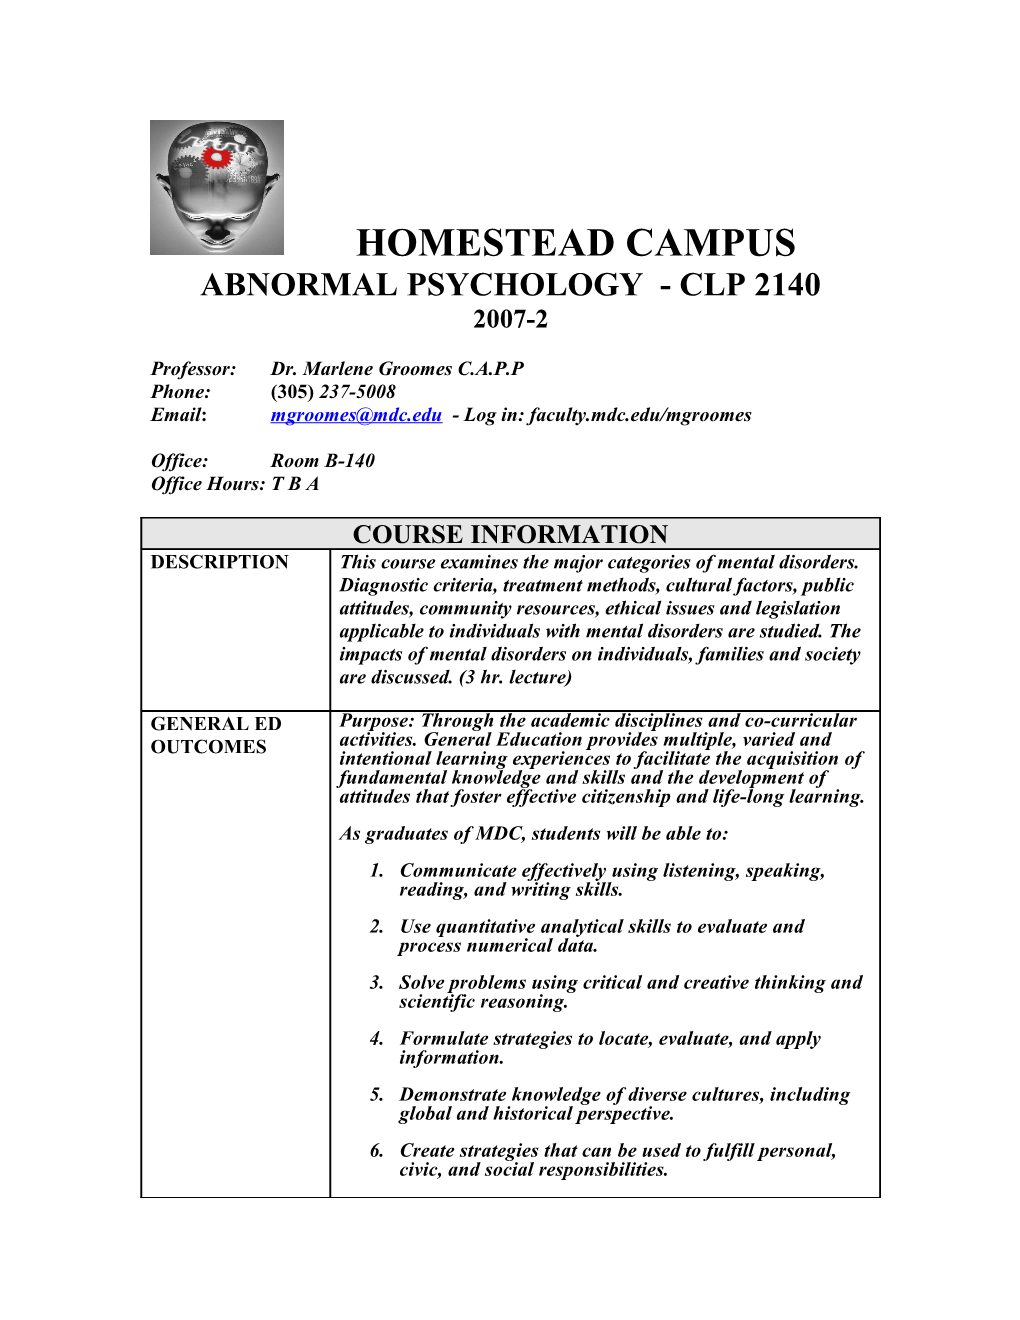 Homestead Campus Education Academy